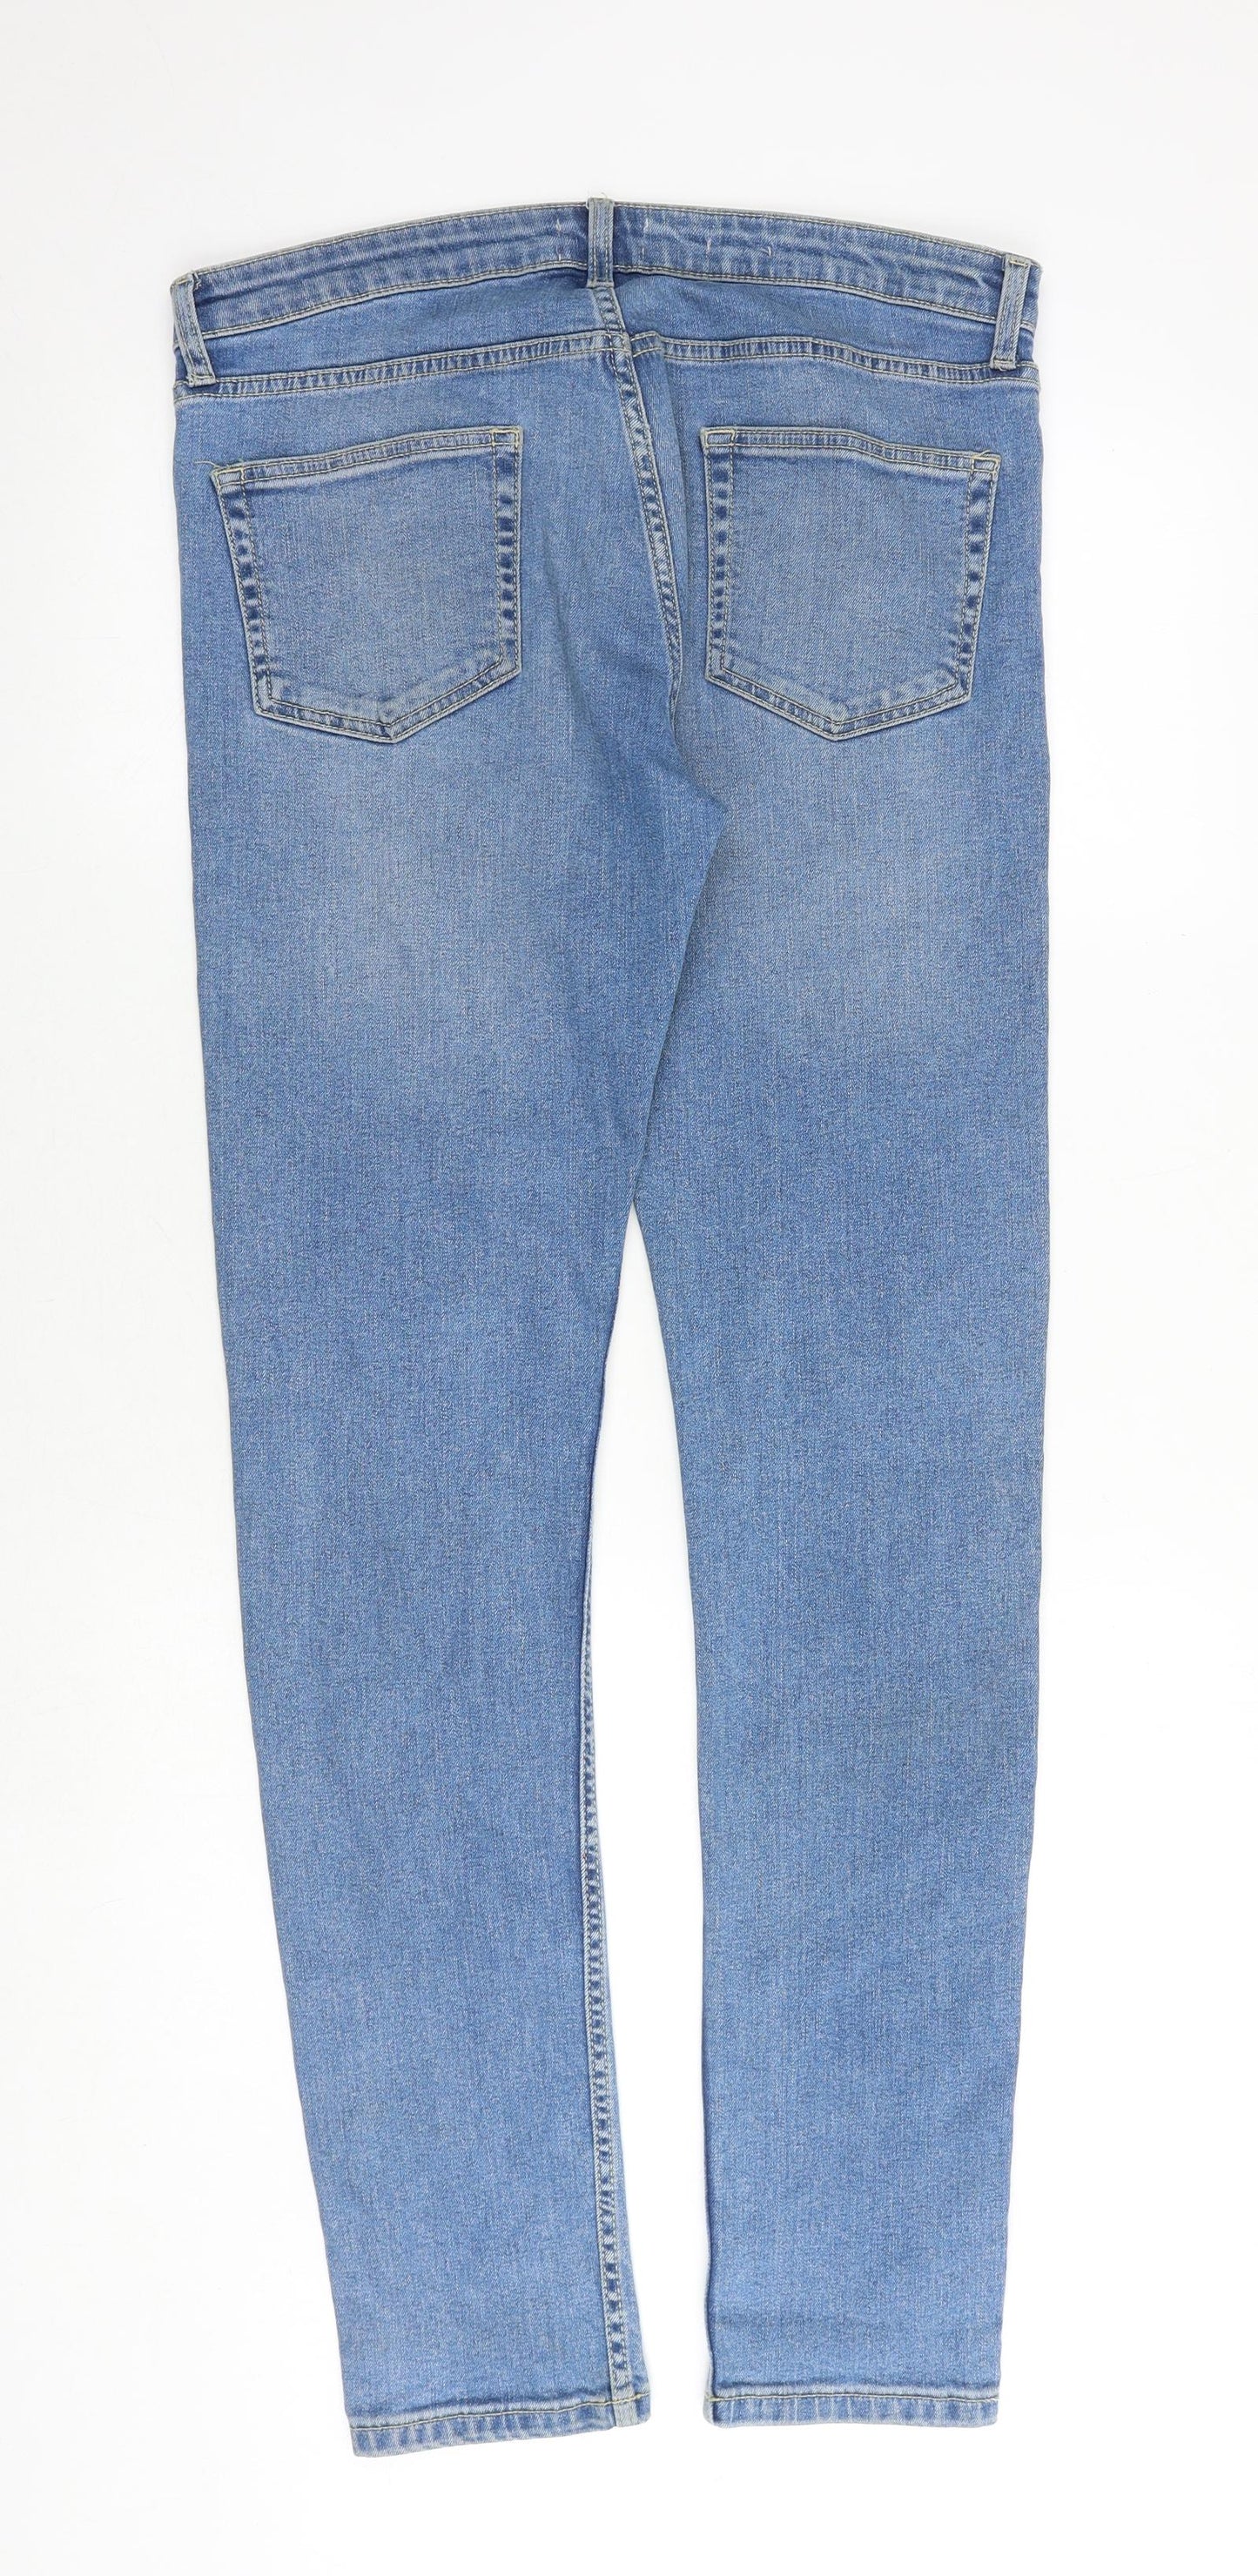 Topman Mens Blue Cotton Skinny Jeans Size 32 in Slim Button